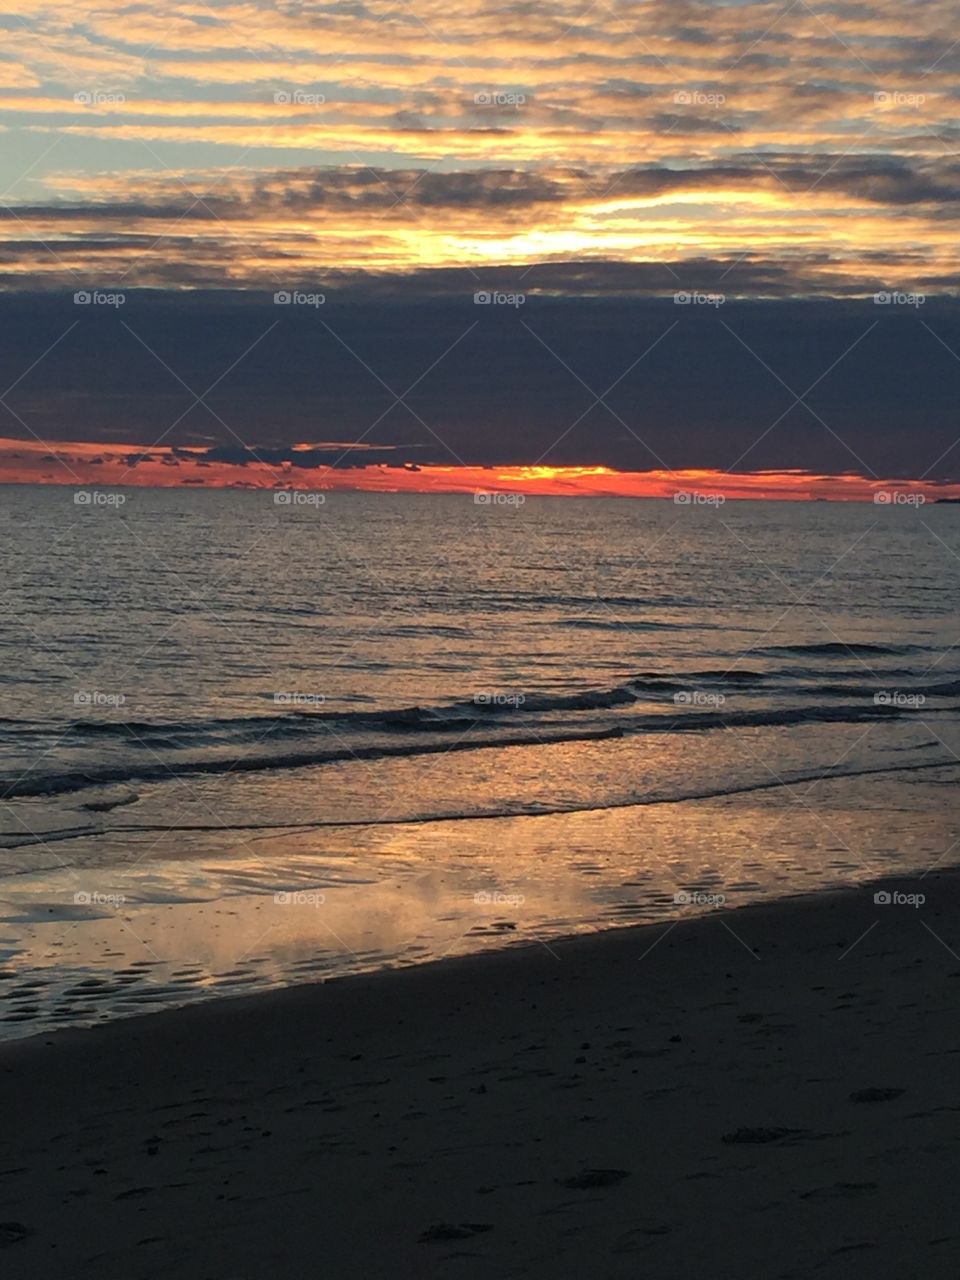 Cape Cod sunset